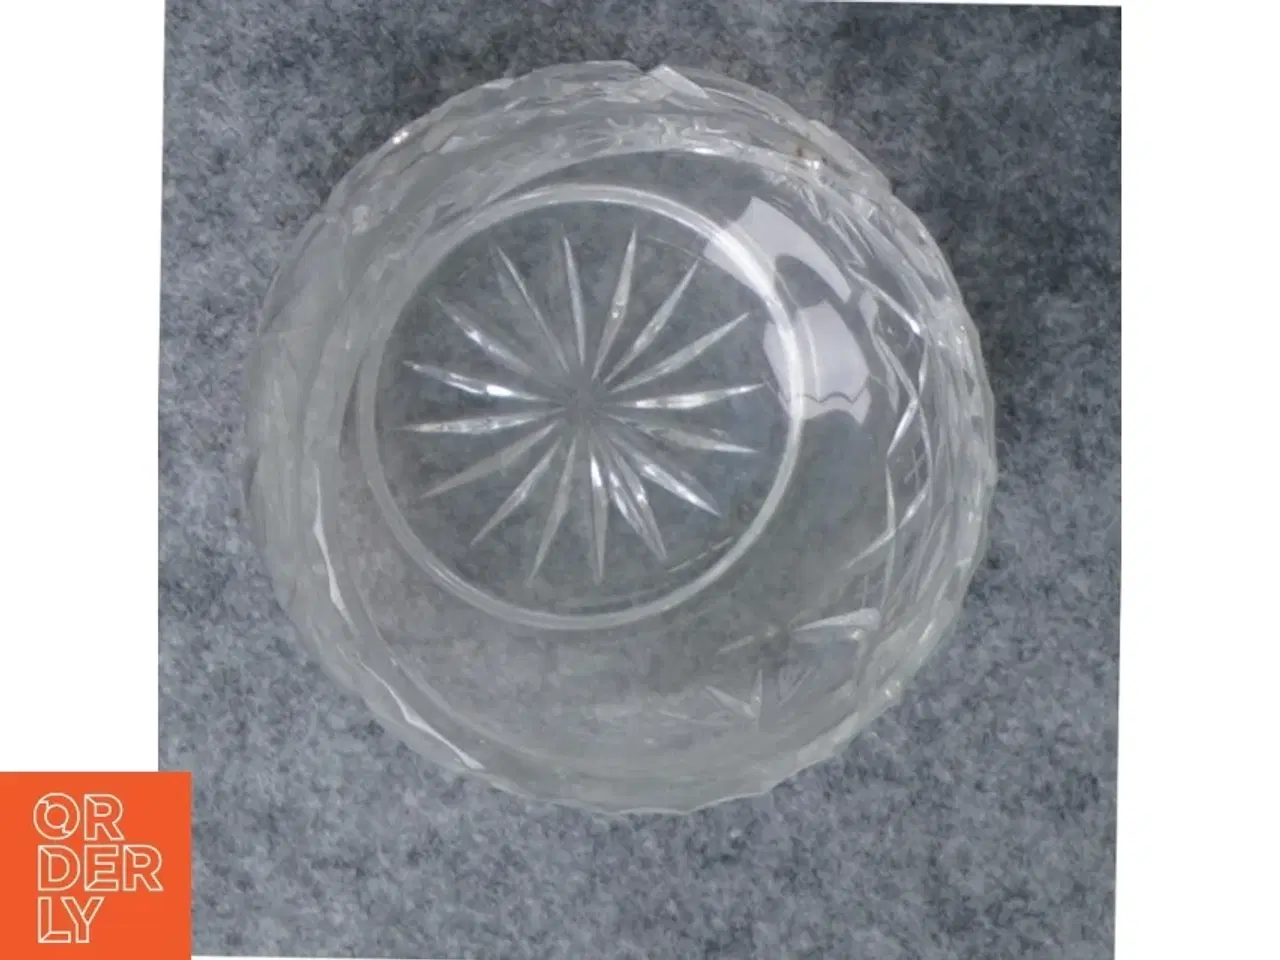 Billede 1 - Krystal skål (str. 10 x 5 cm)